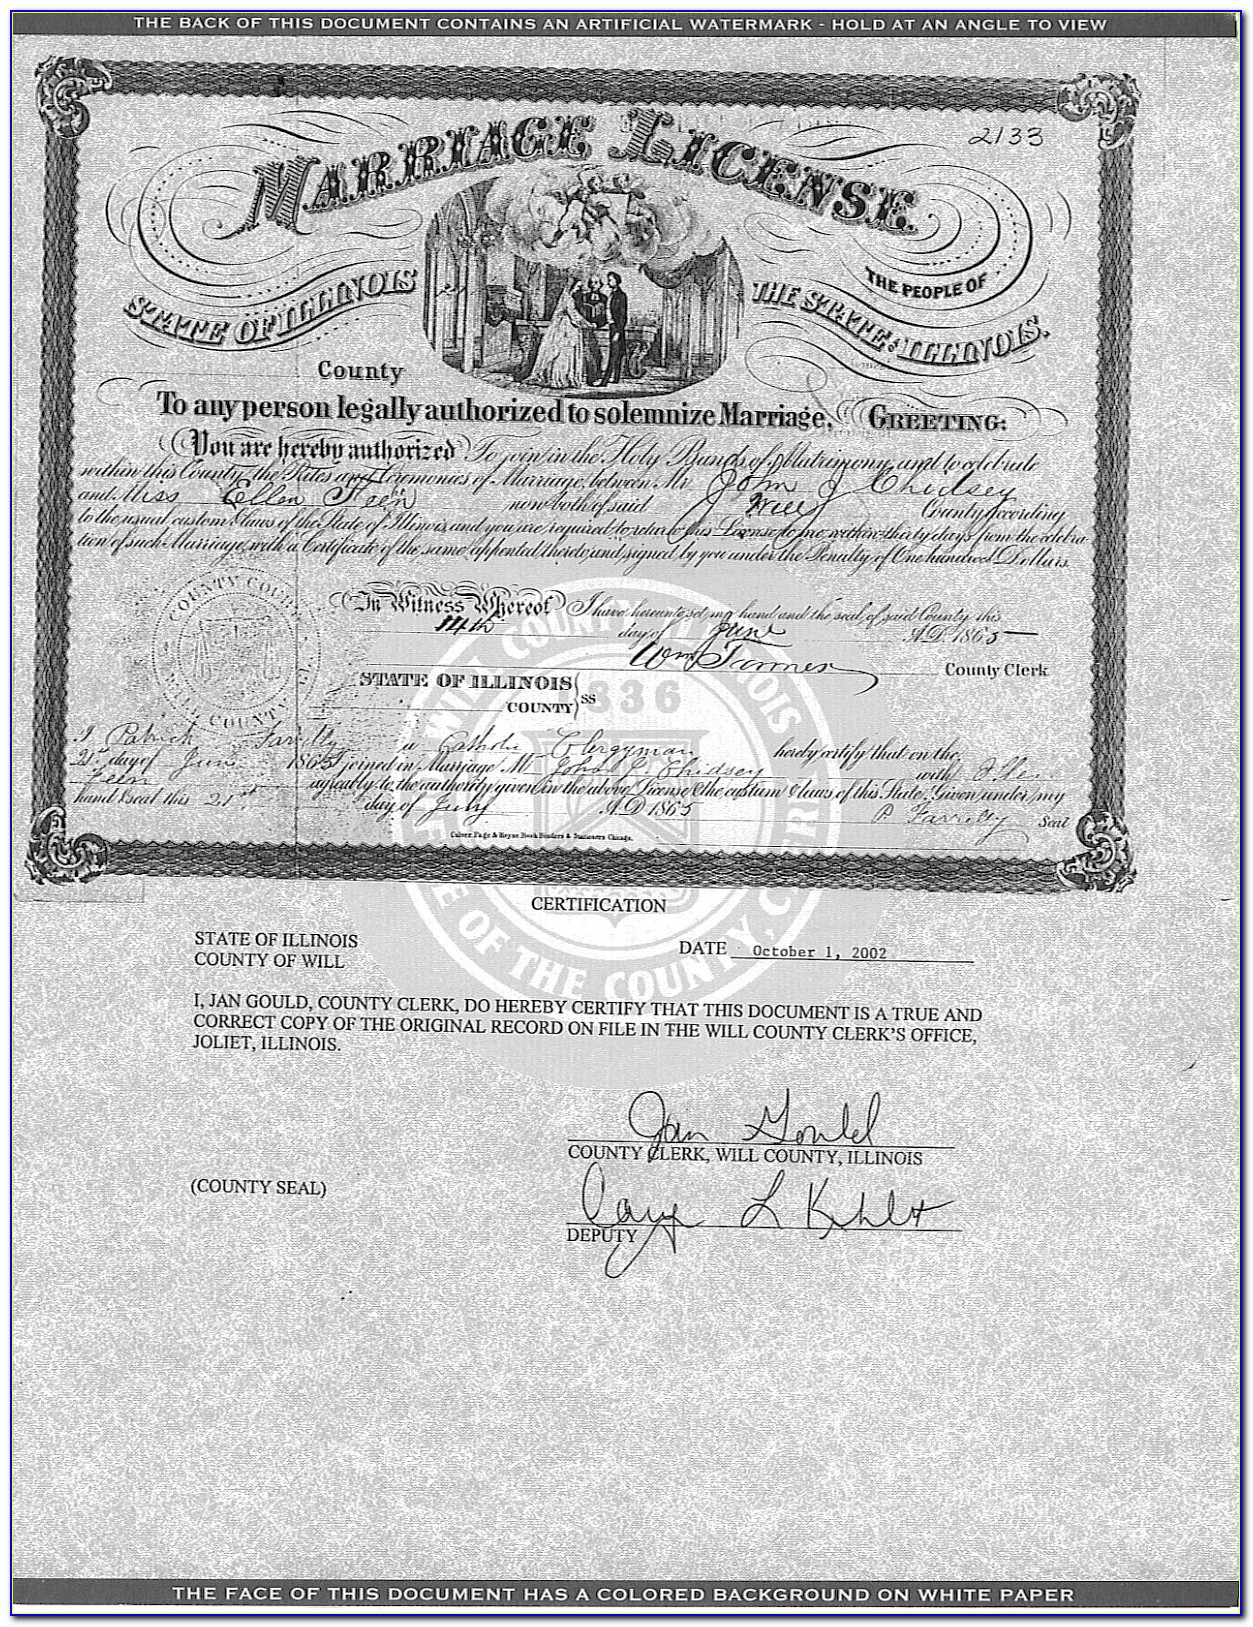 Kane County Illinois Birth Certificate Copy